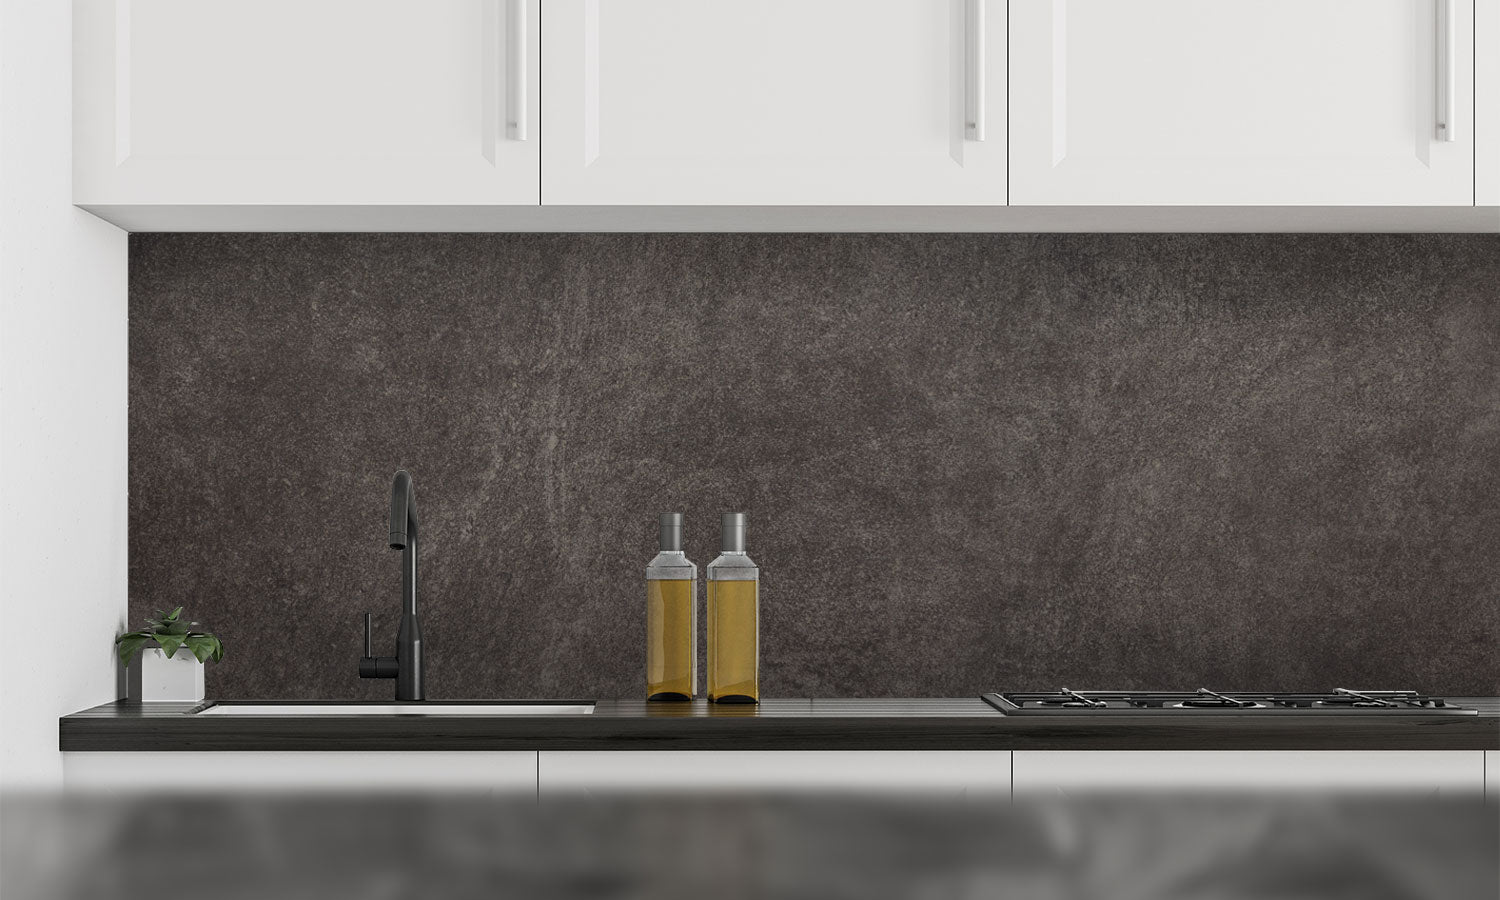 Paneli za kuhinje Concrete wall -  Stakleni / PVC ploče / Pleksiglas -  sa printom za kuhinju, Zidne obloge PKU057